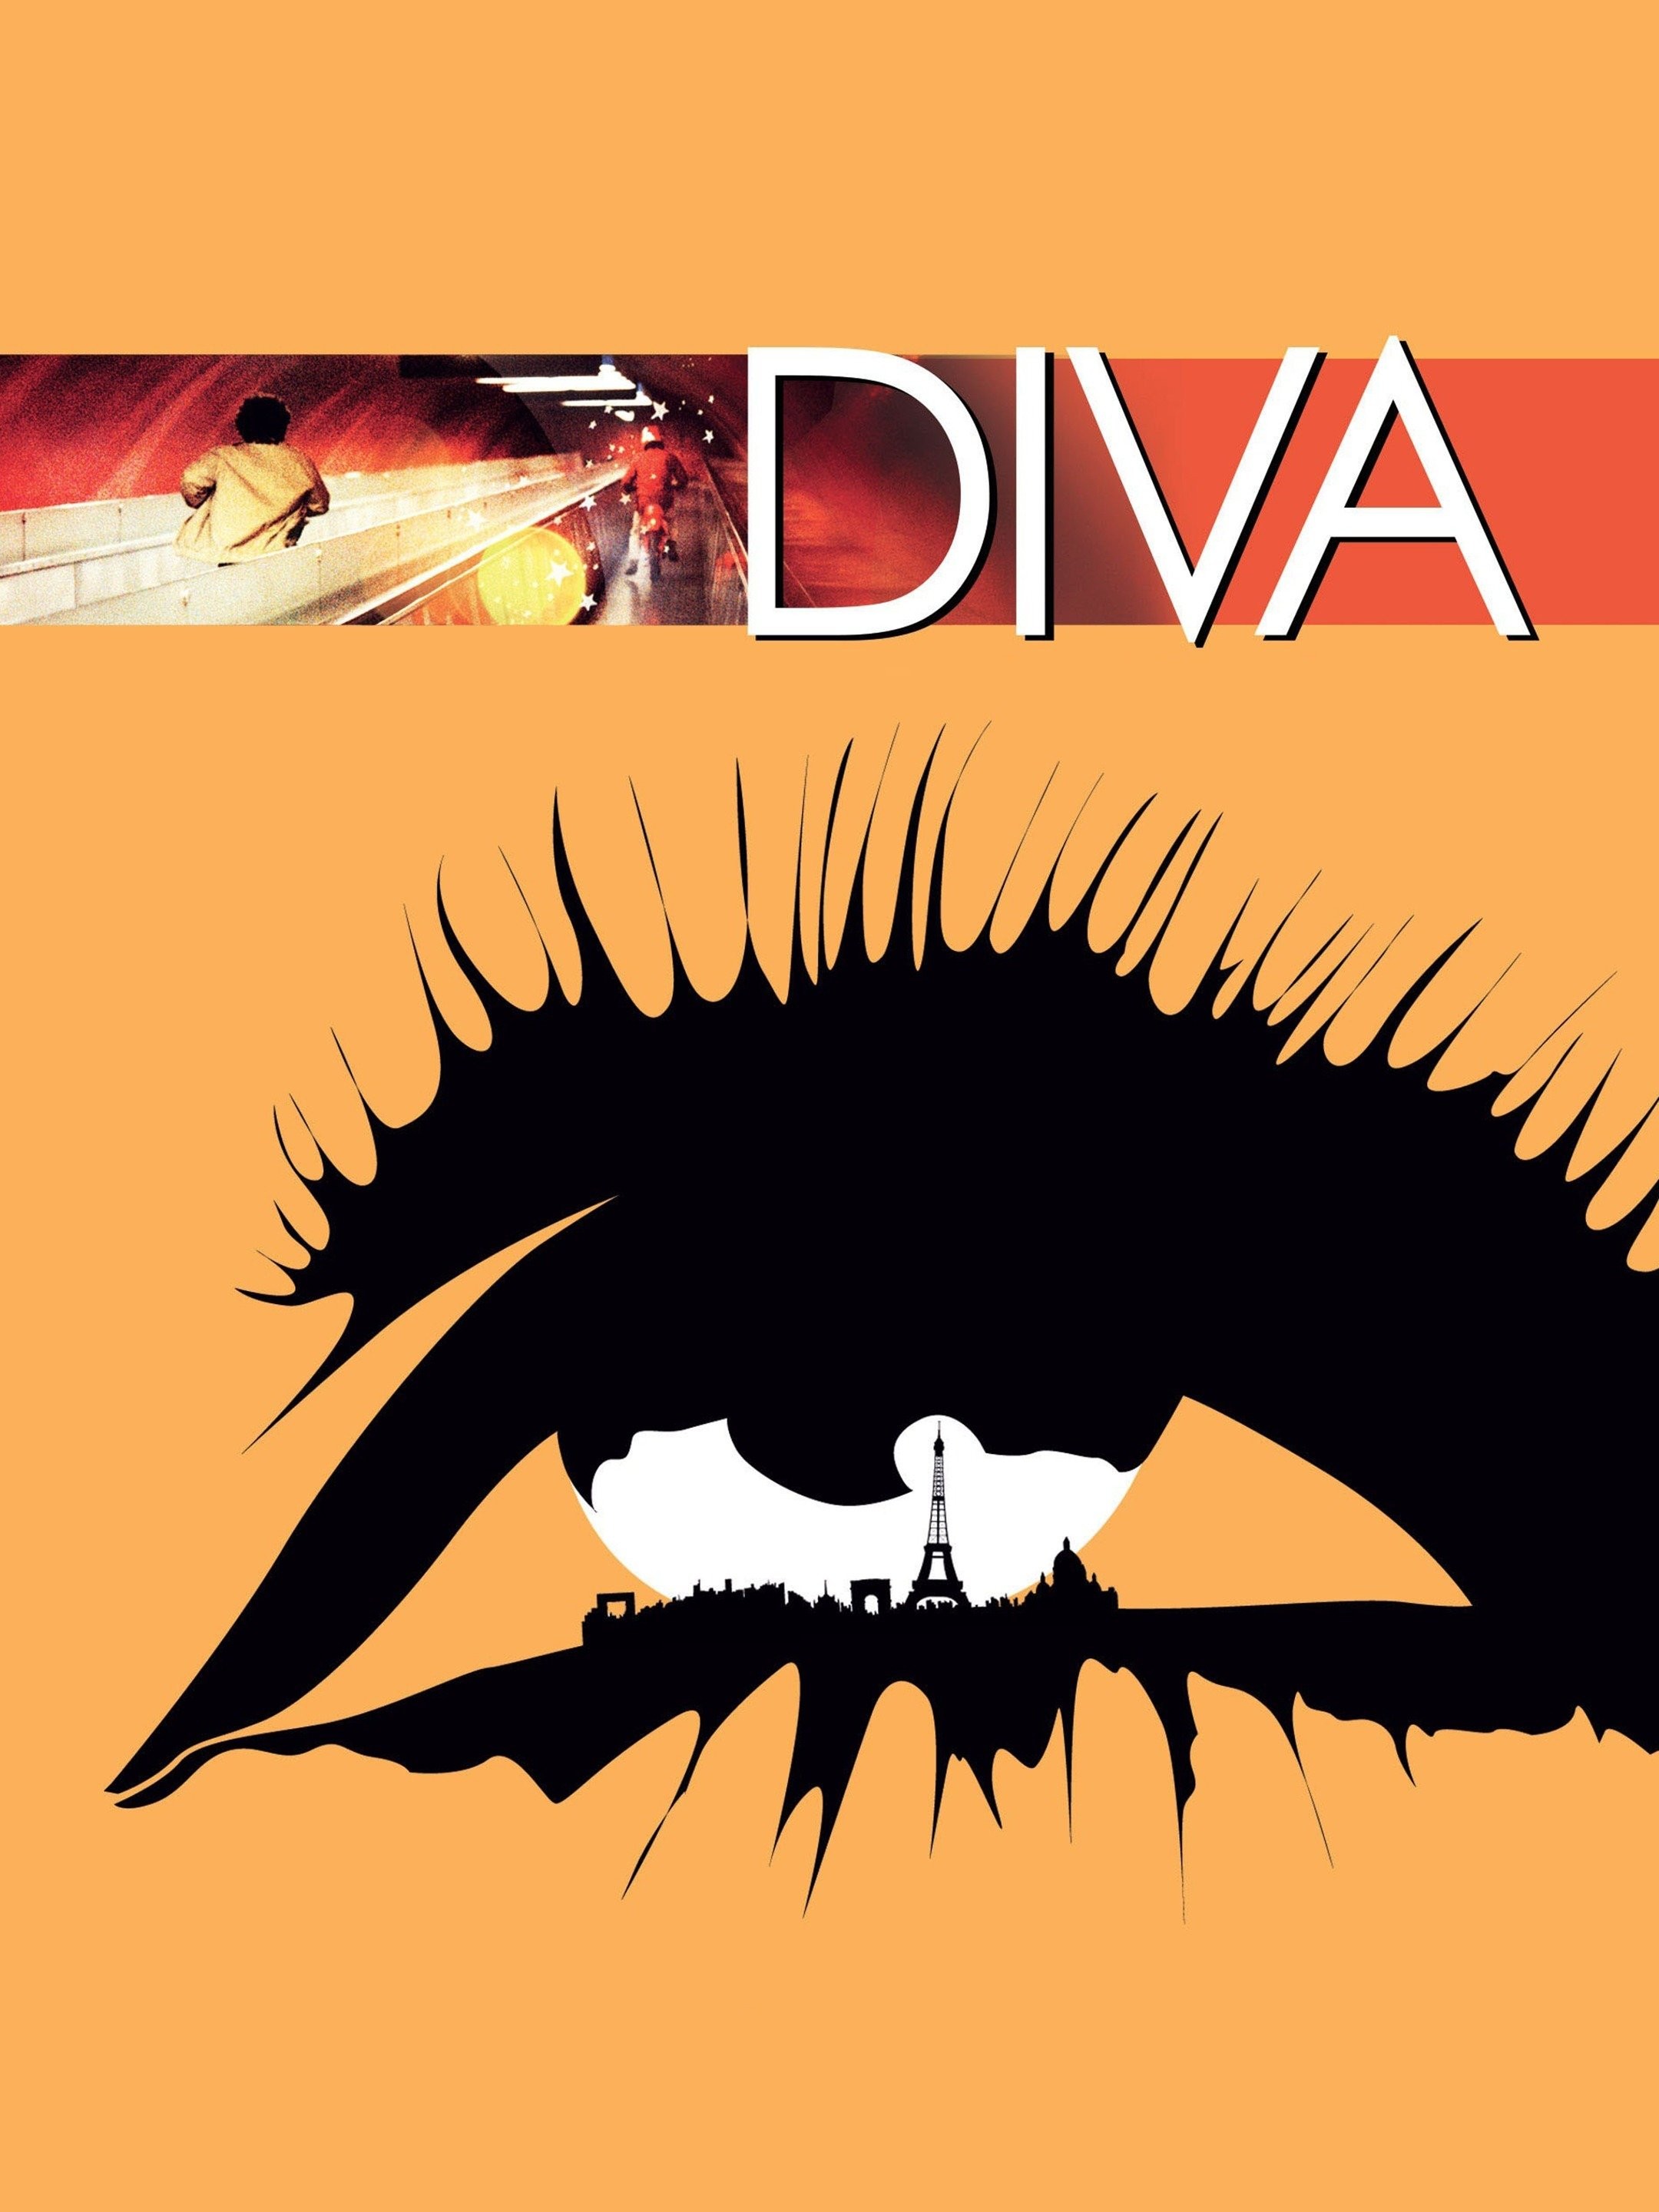 Diva (1981 film) - Wikipedia